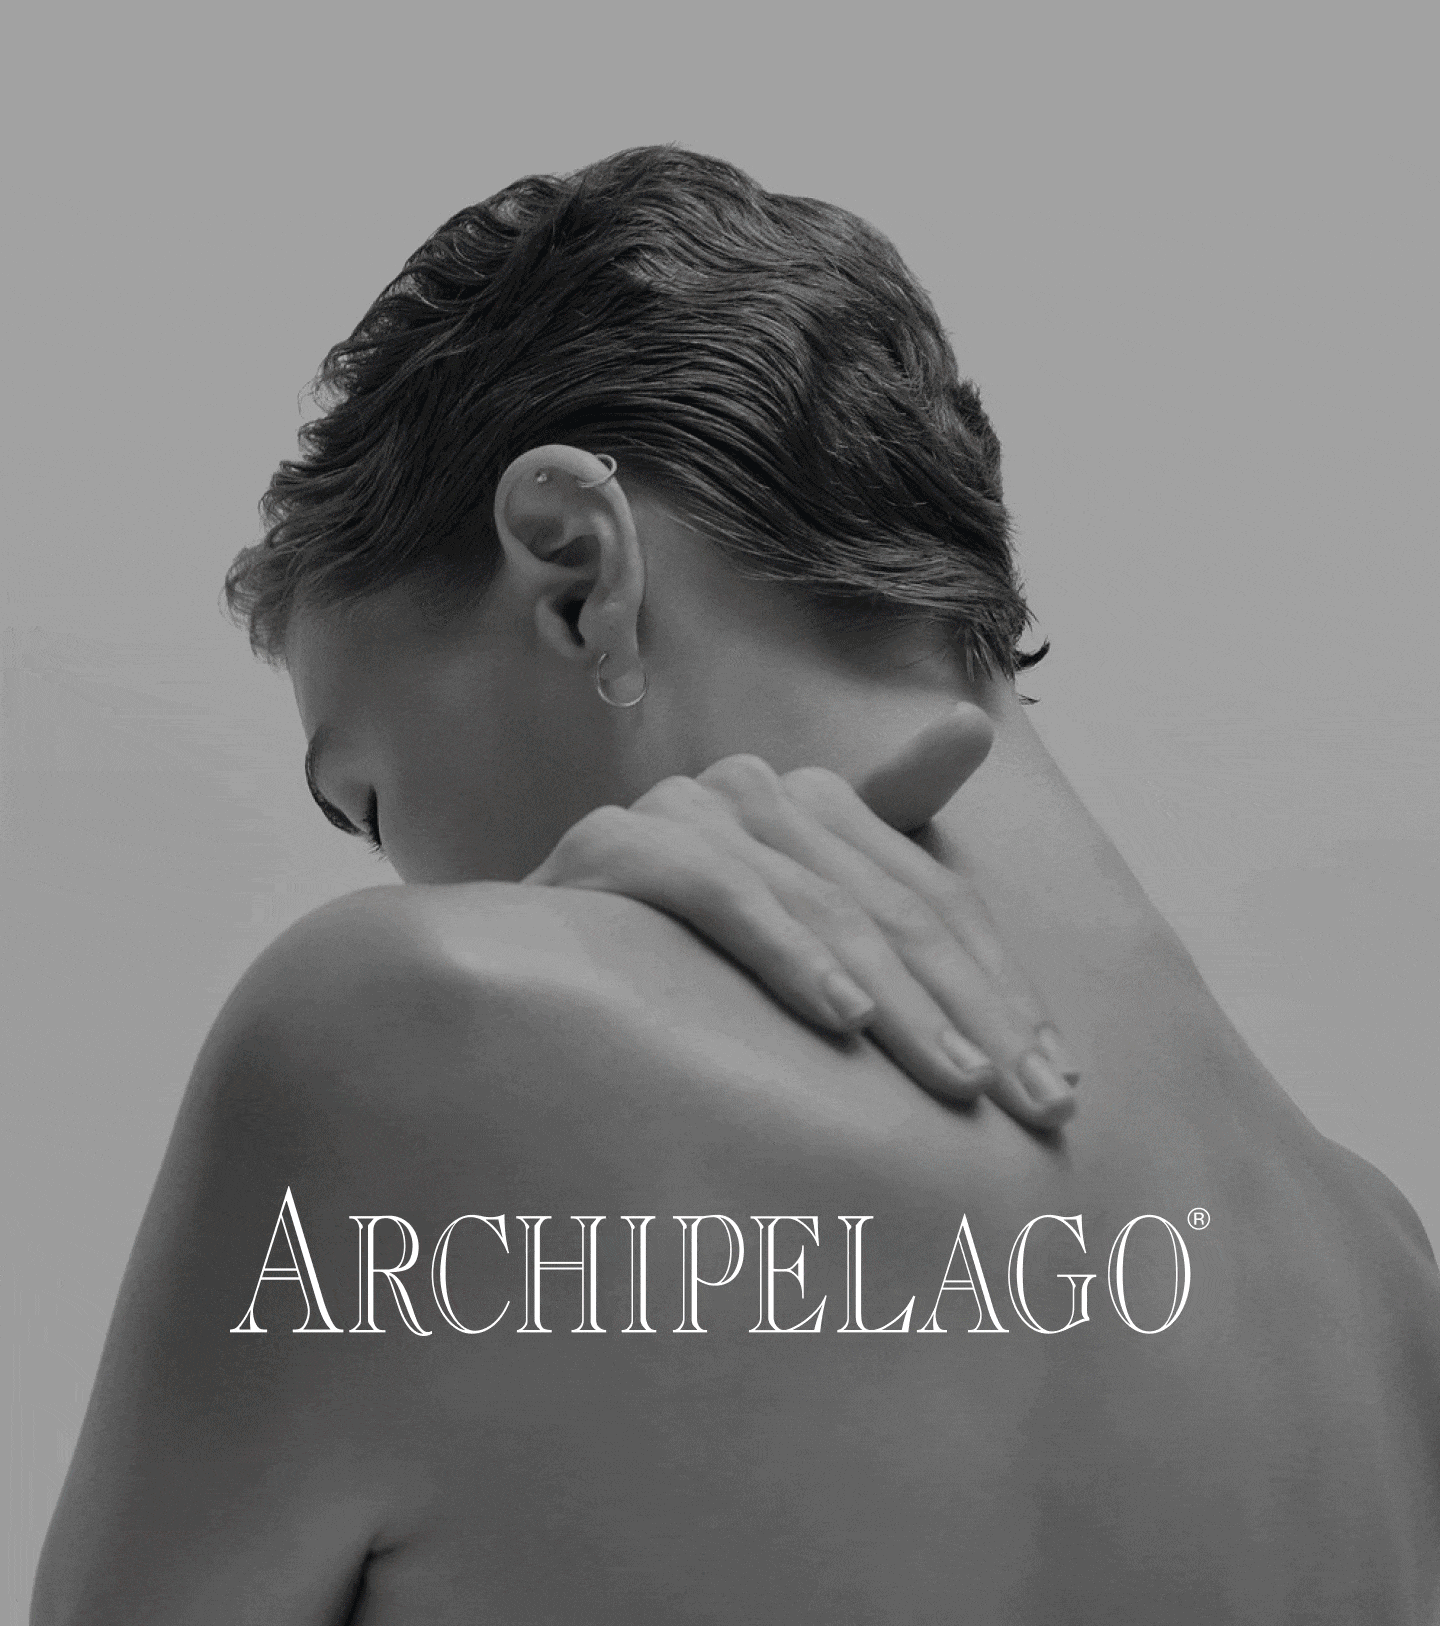 Archipelago Brand Images